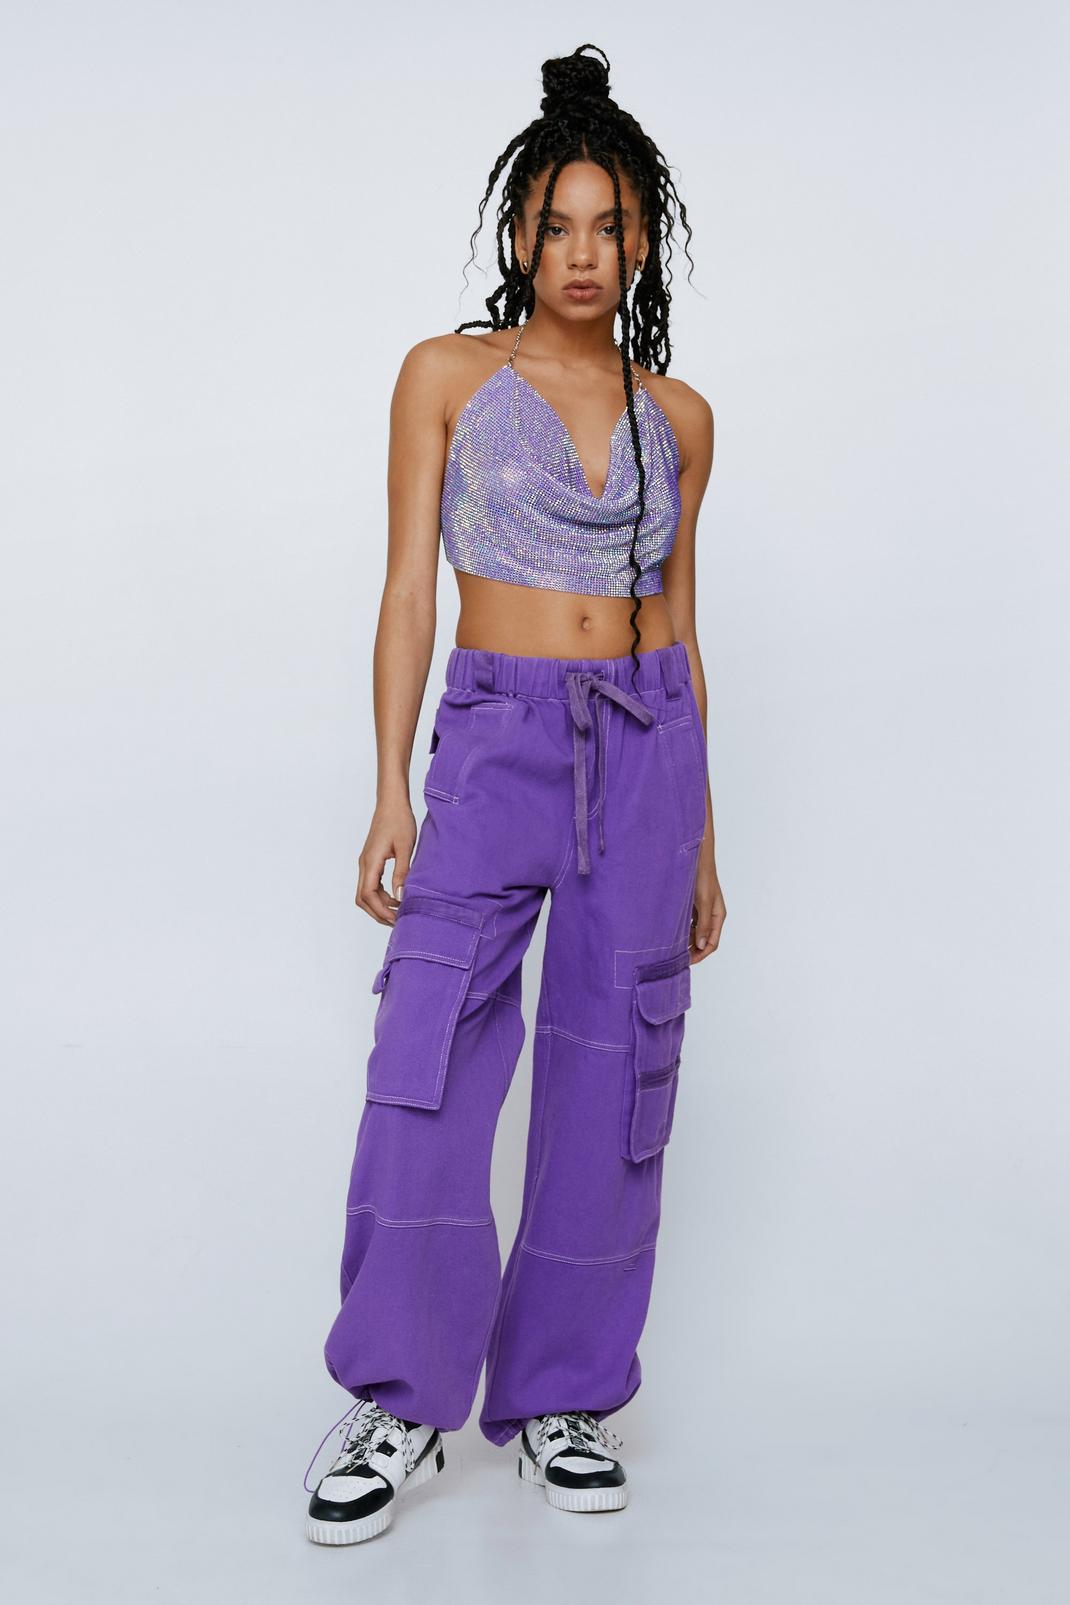 Button Pocket Cargo Pants - vanci.co  Cargo pants, Purple cargo pants,  Womens bottoms